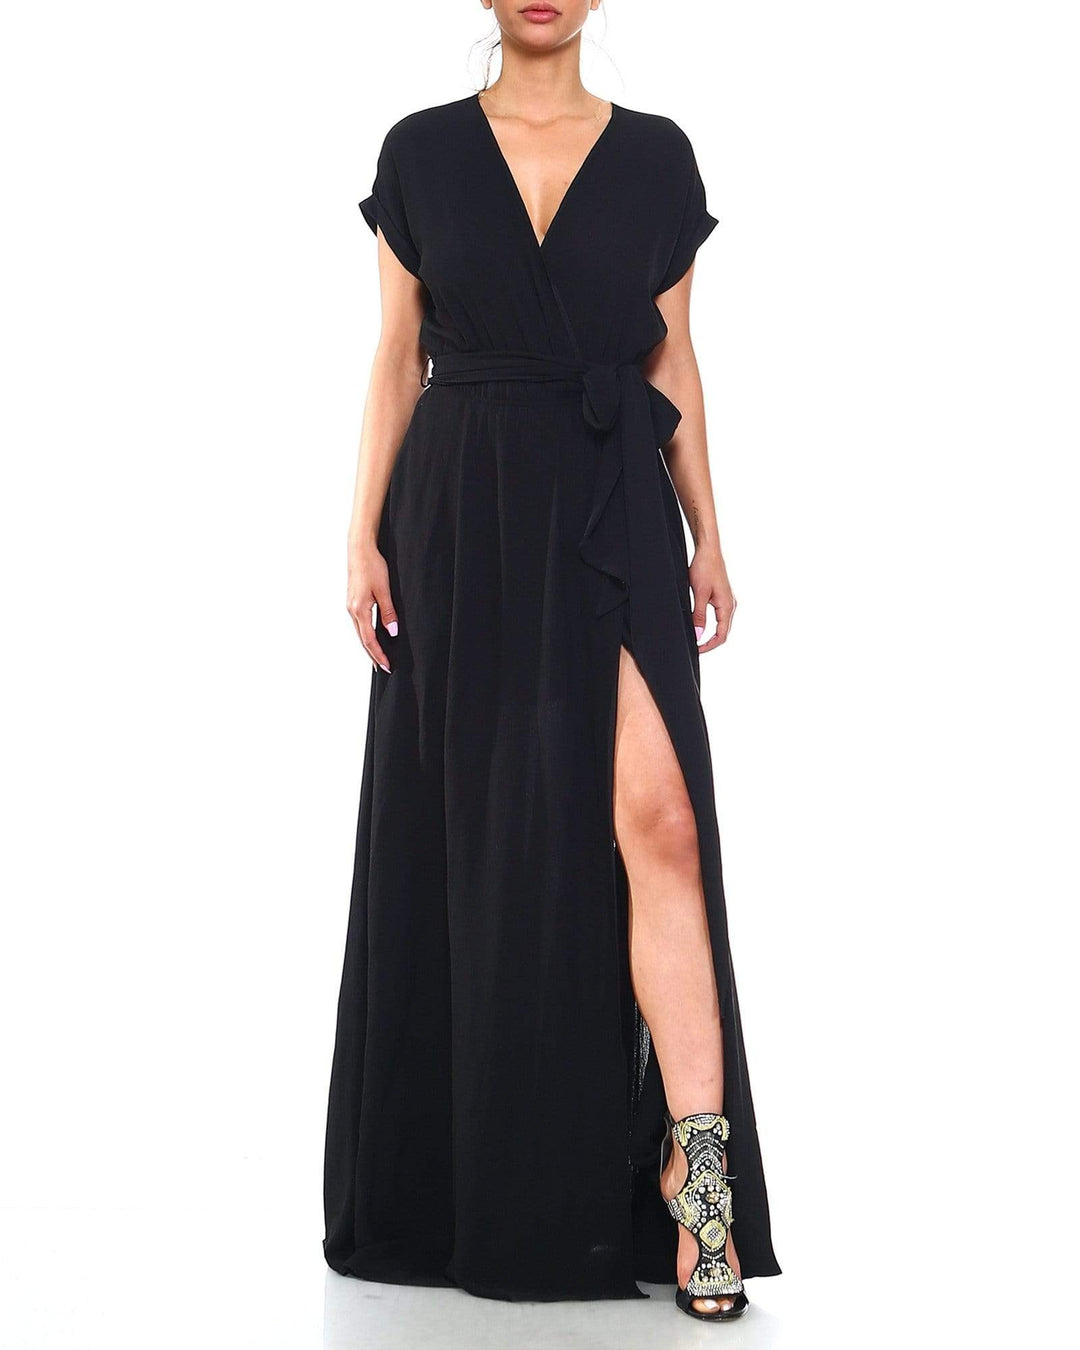 Jasmine Maxi Dress - Black by Meghan Fabulous